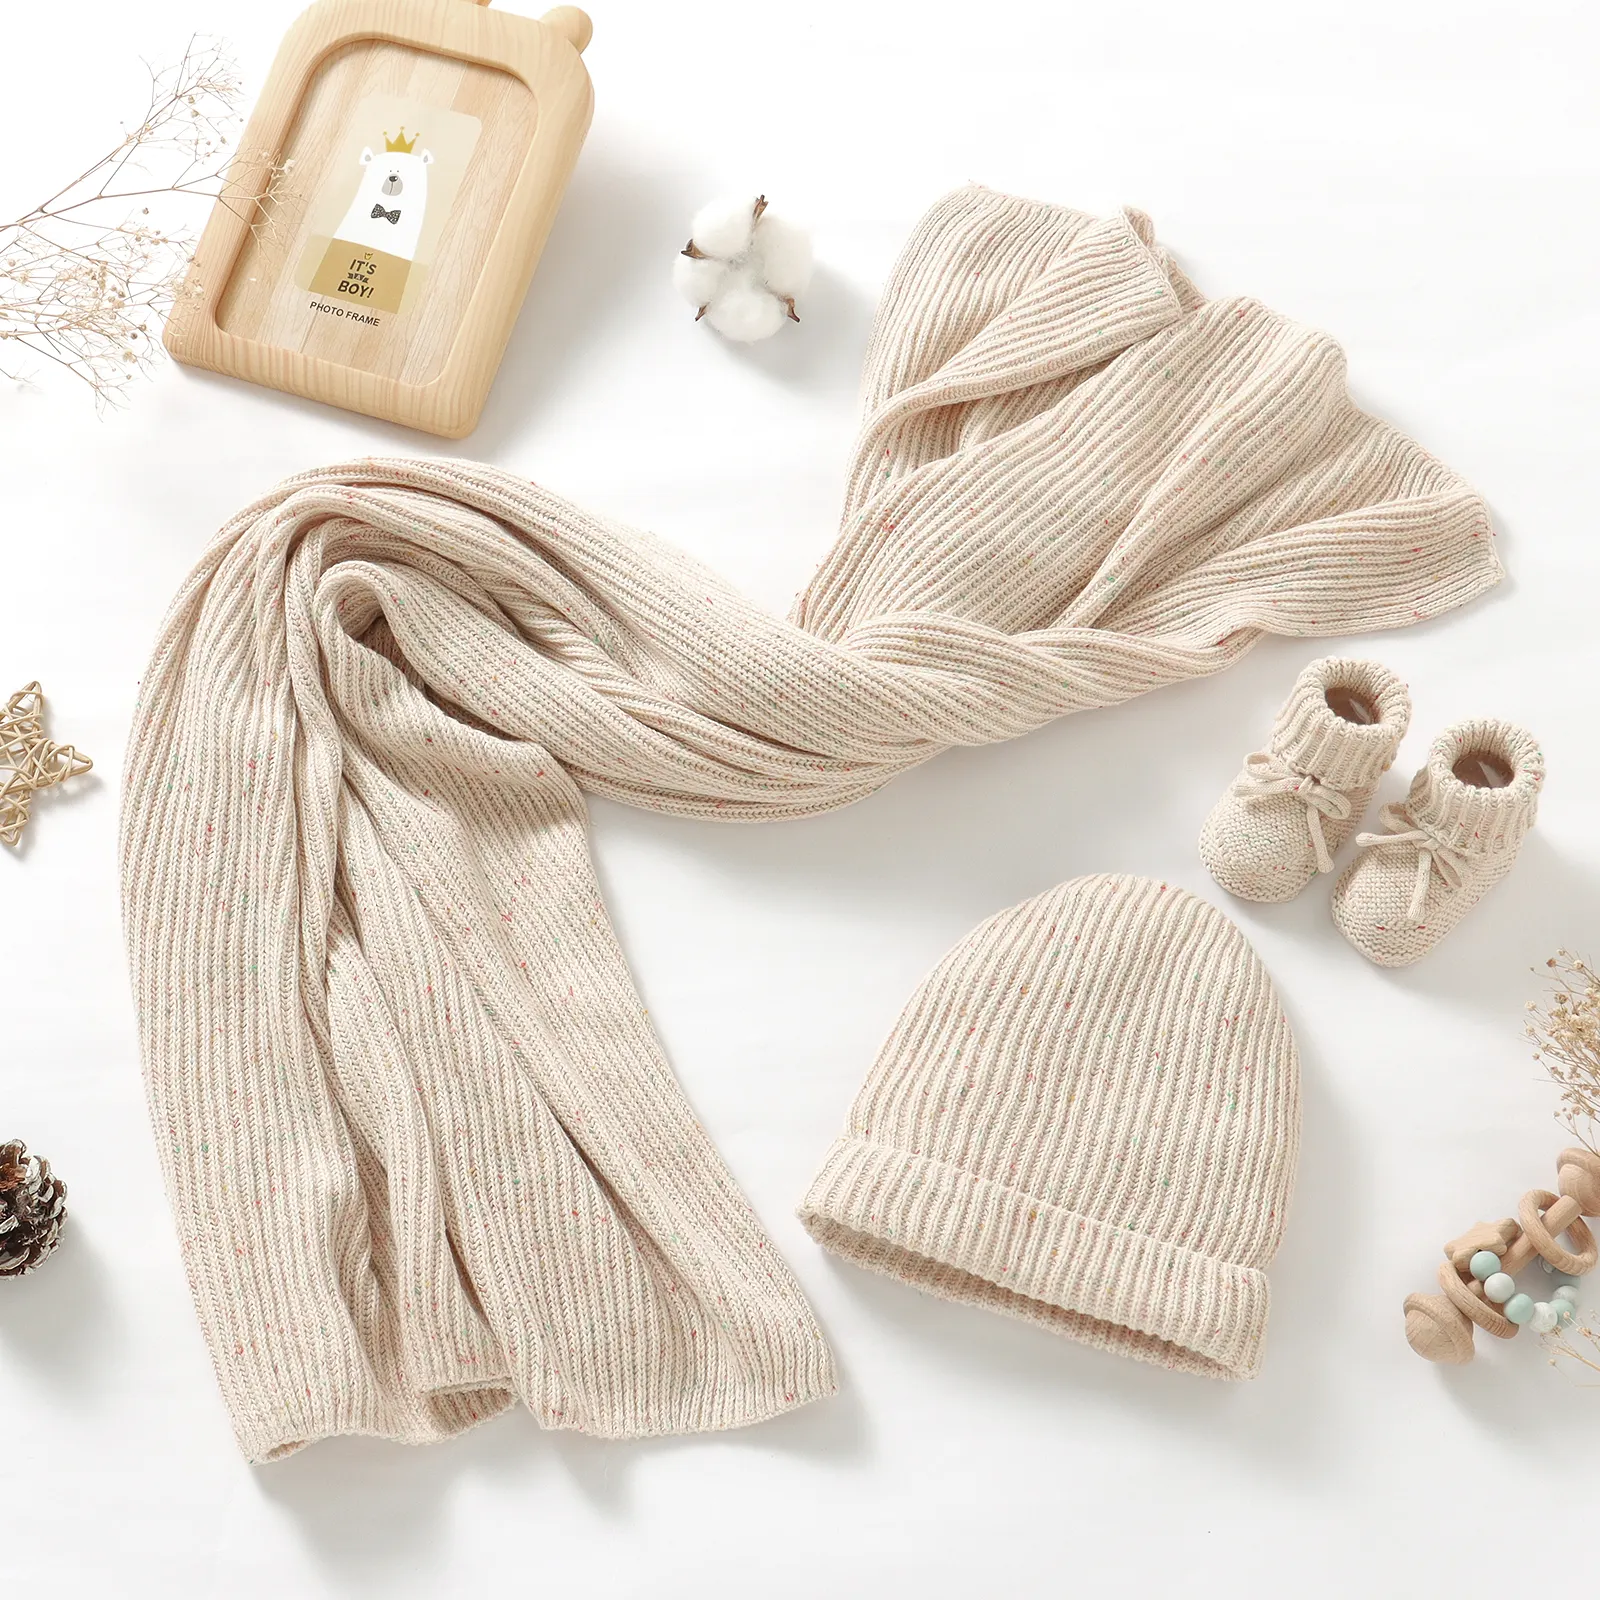 MU 100%Cotton Baby Crochet Knitted Blanket,Hat,Mitten,Slipper gift set Personal Customize